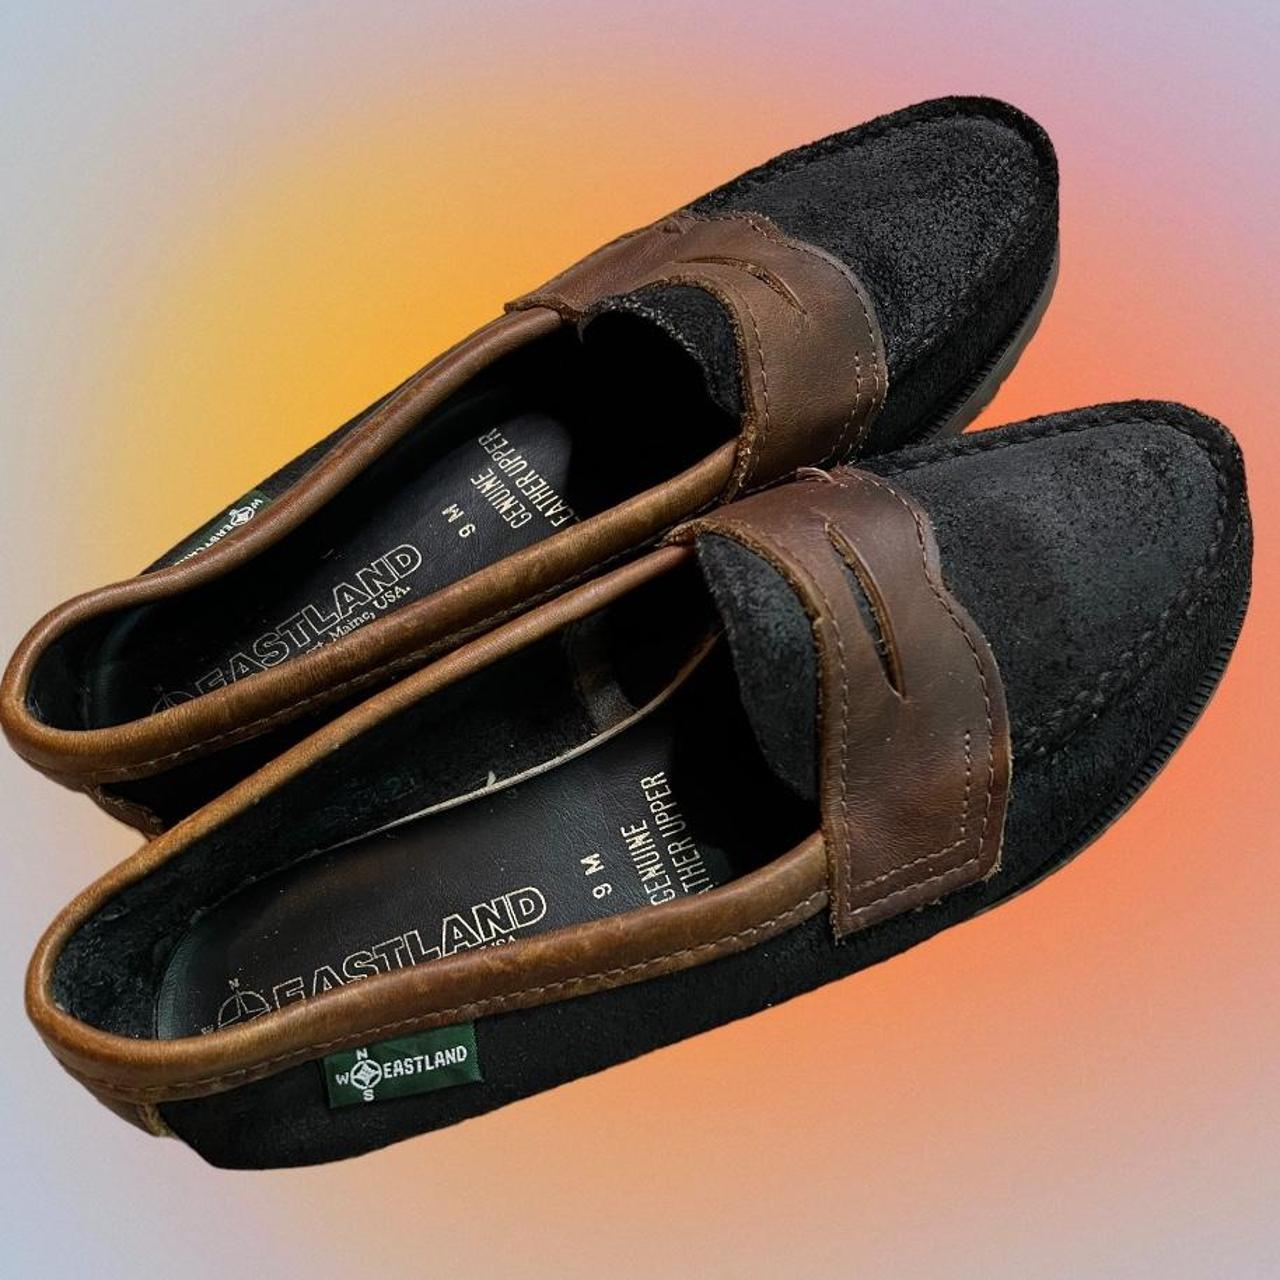 Giani Bernini black leather loafers driving shoes - Depop